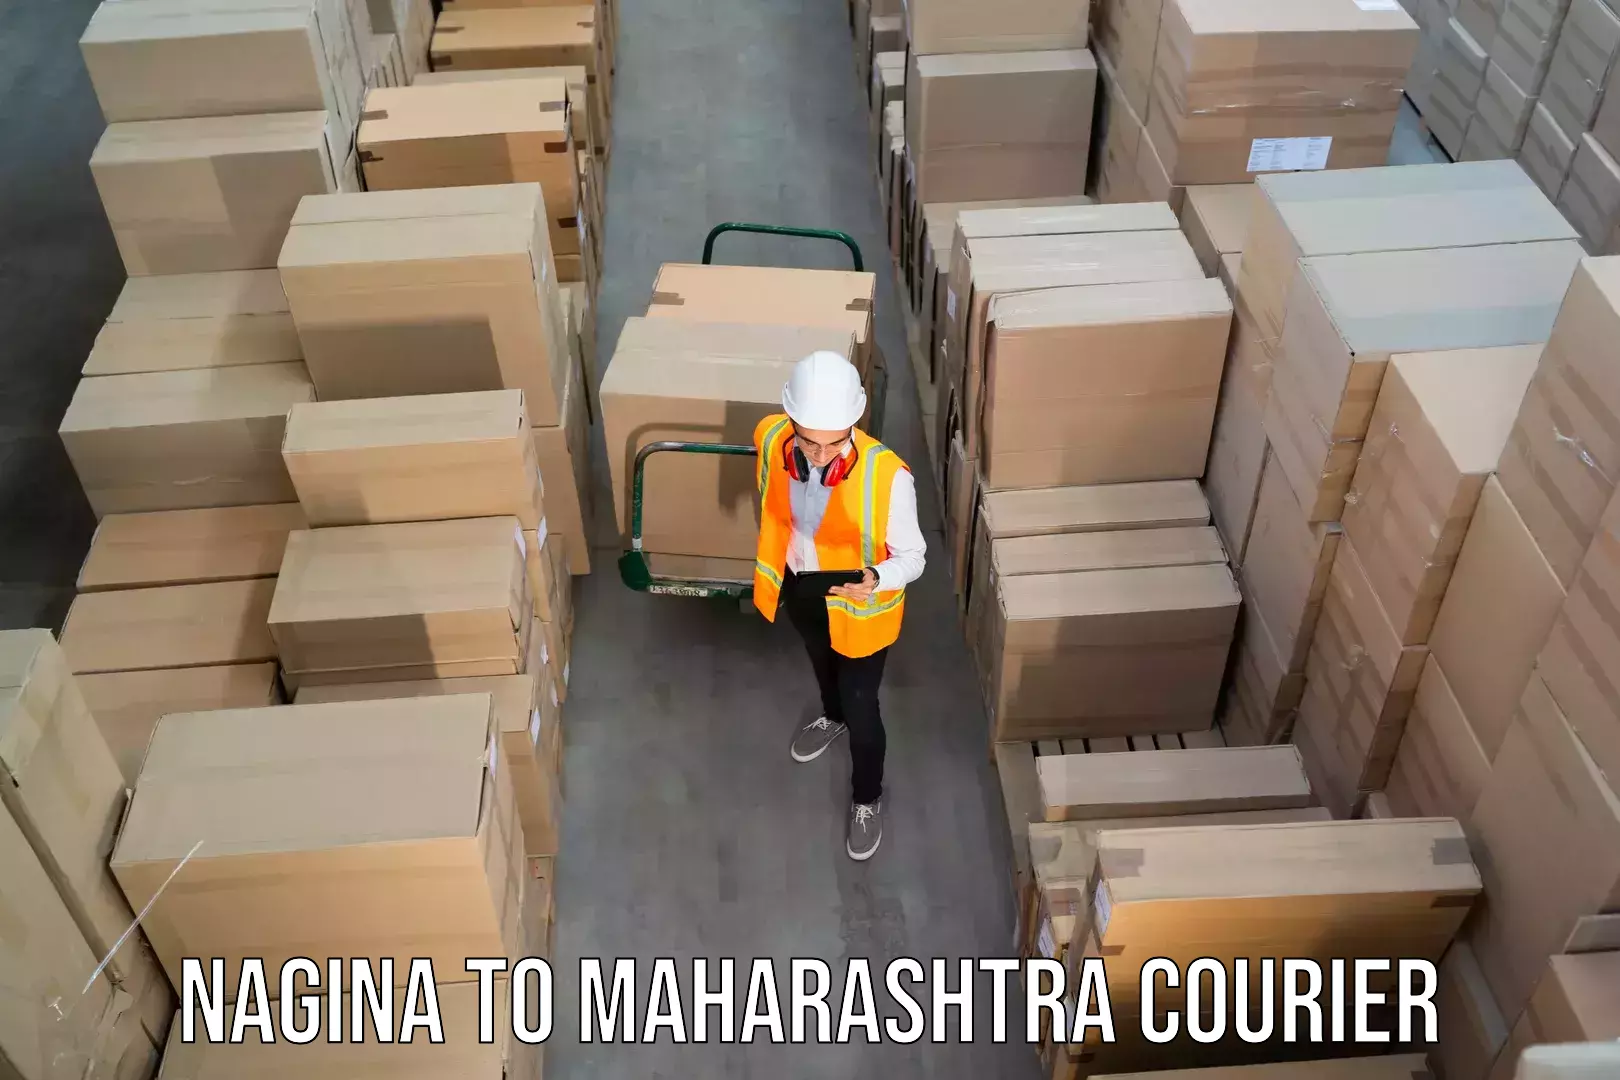 Express mail solutions Nagina to Maharashtra